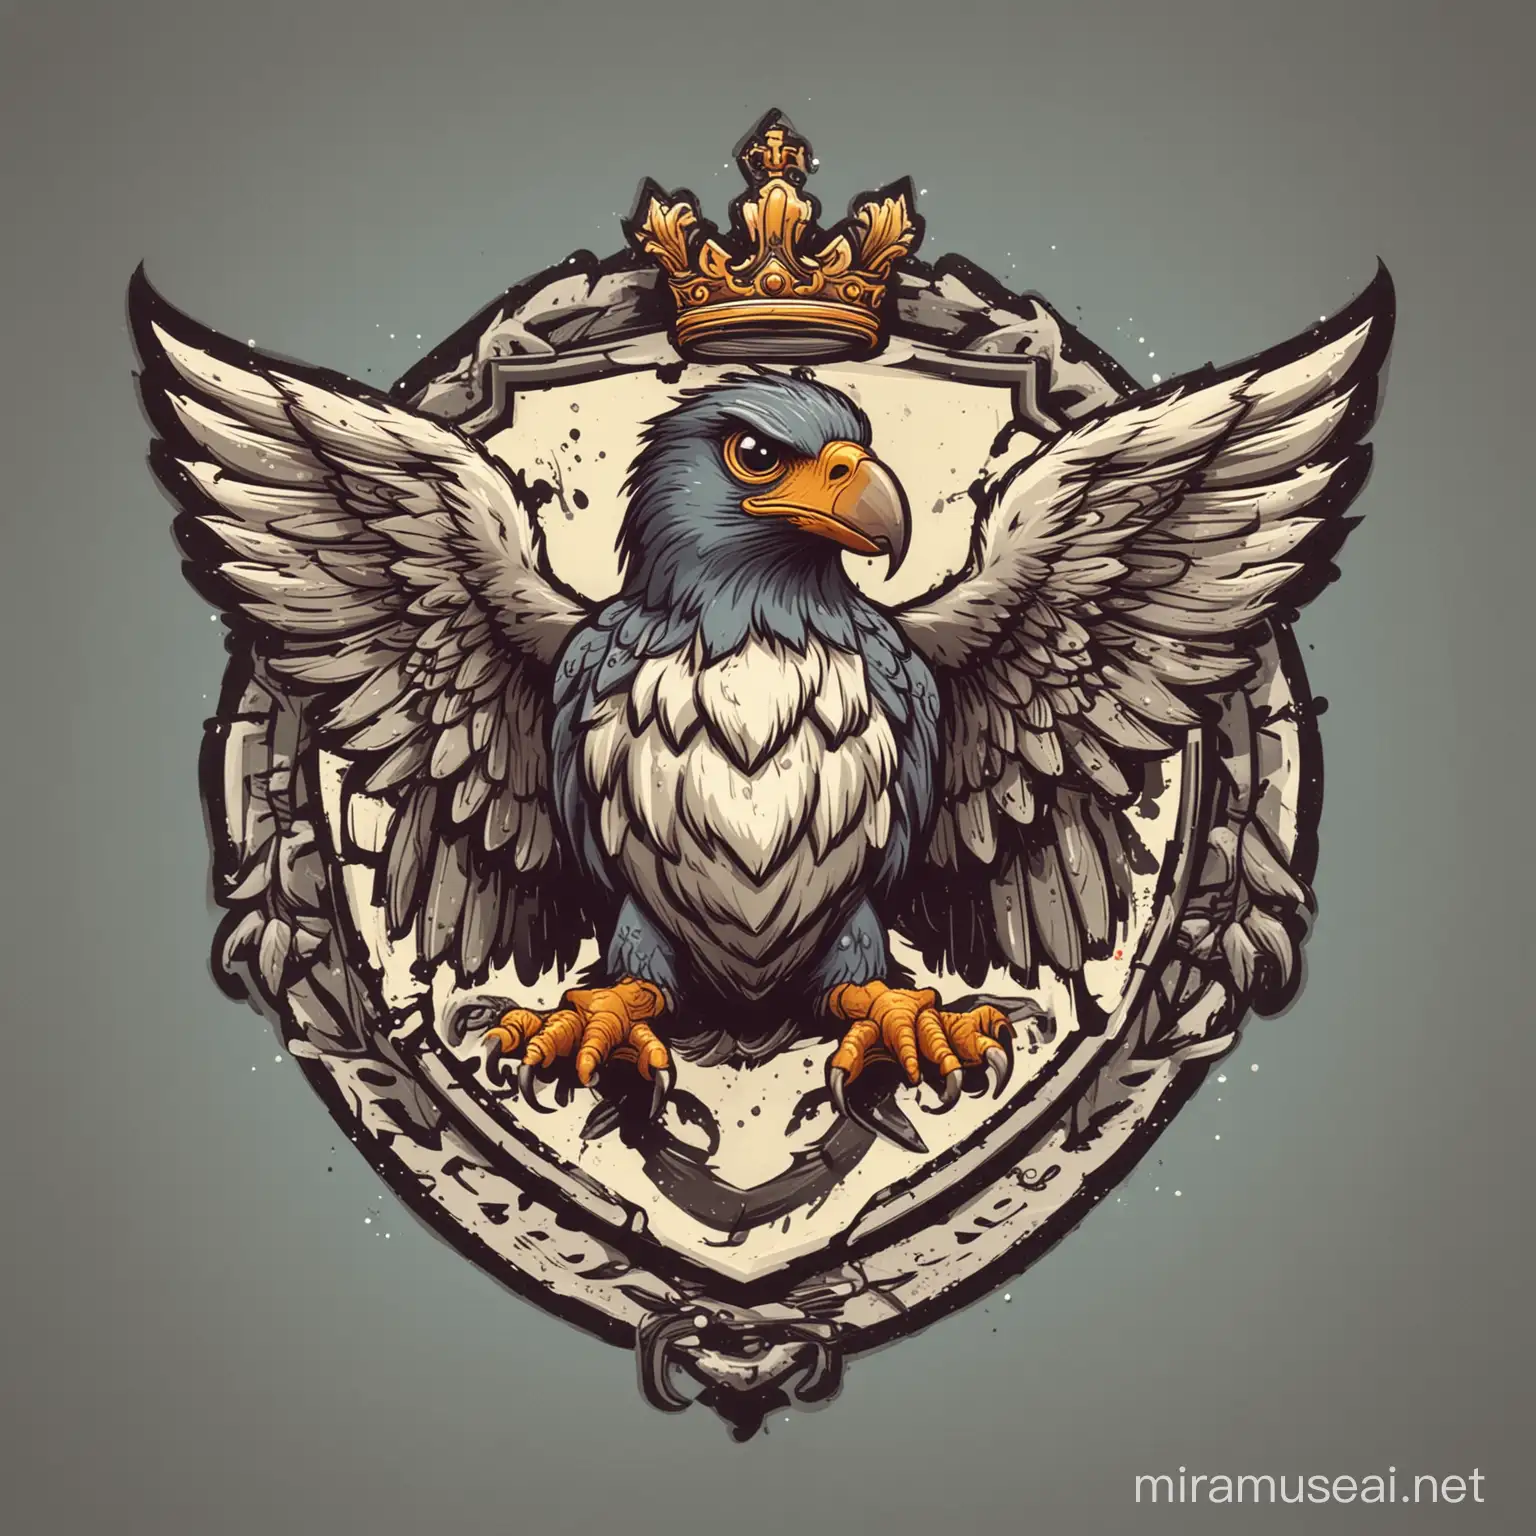 Cheeky Falcon Cartoon Crest Playful Bird Emblem in Animated Style